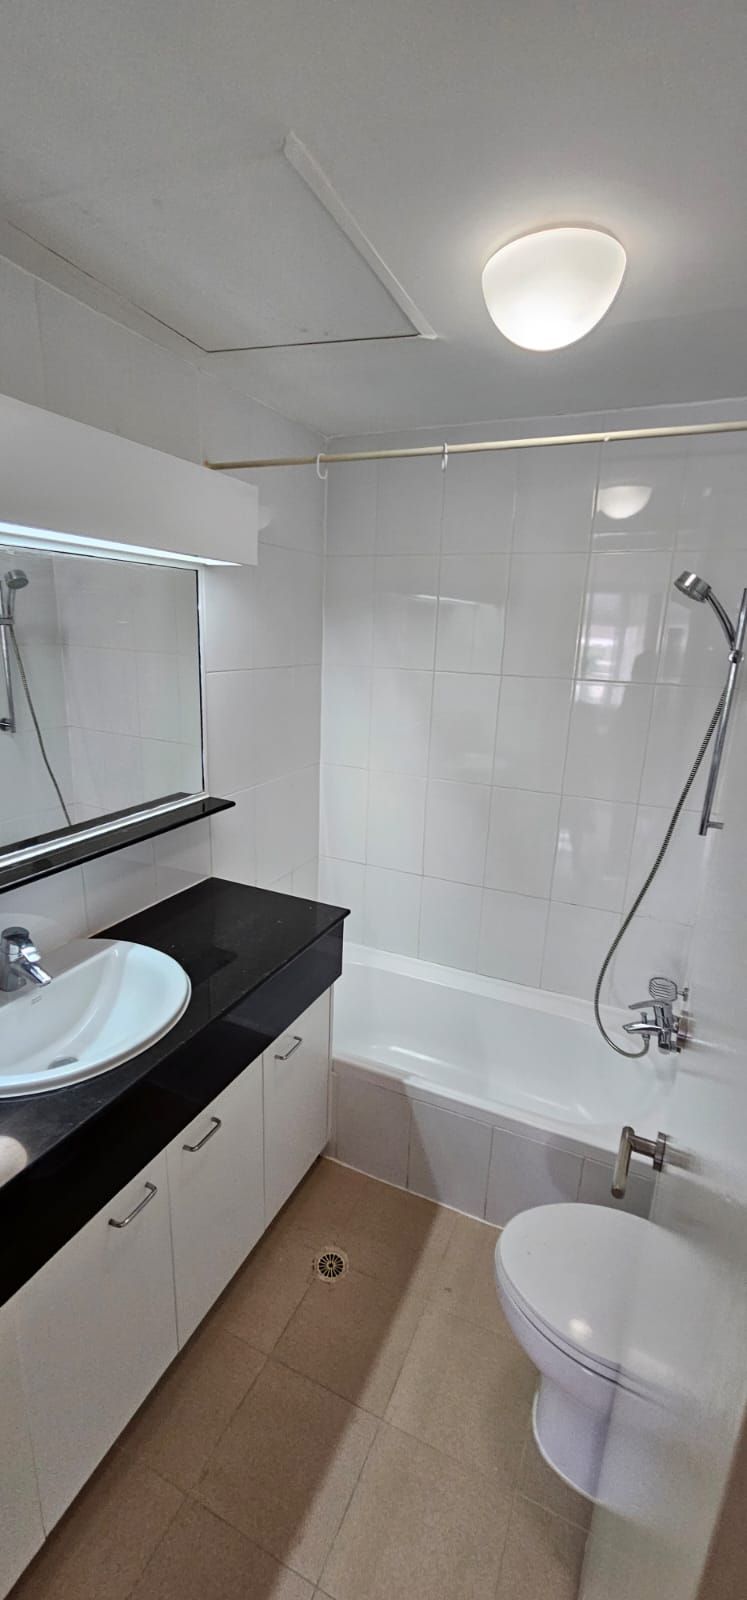 3 bedrooms, 1 Bathroom 150sqm Tipamas Suites For Rent